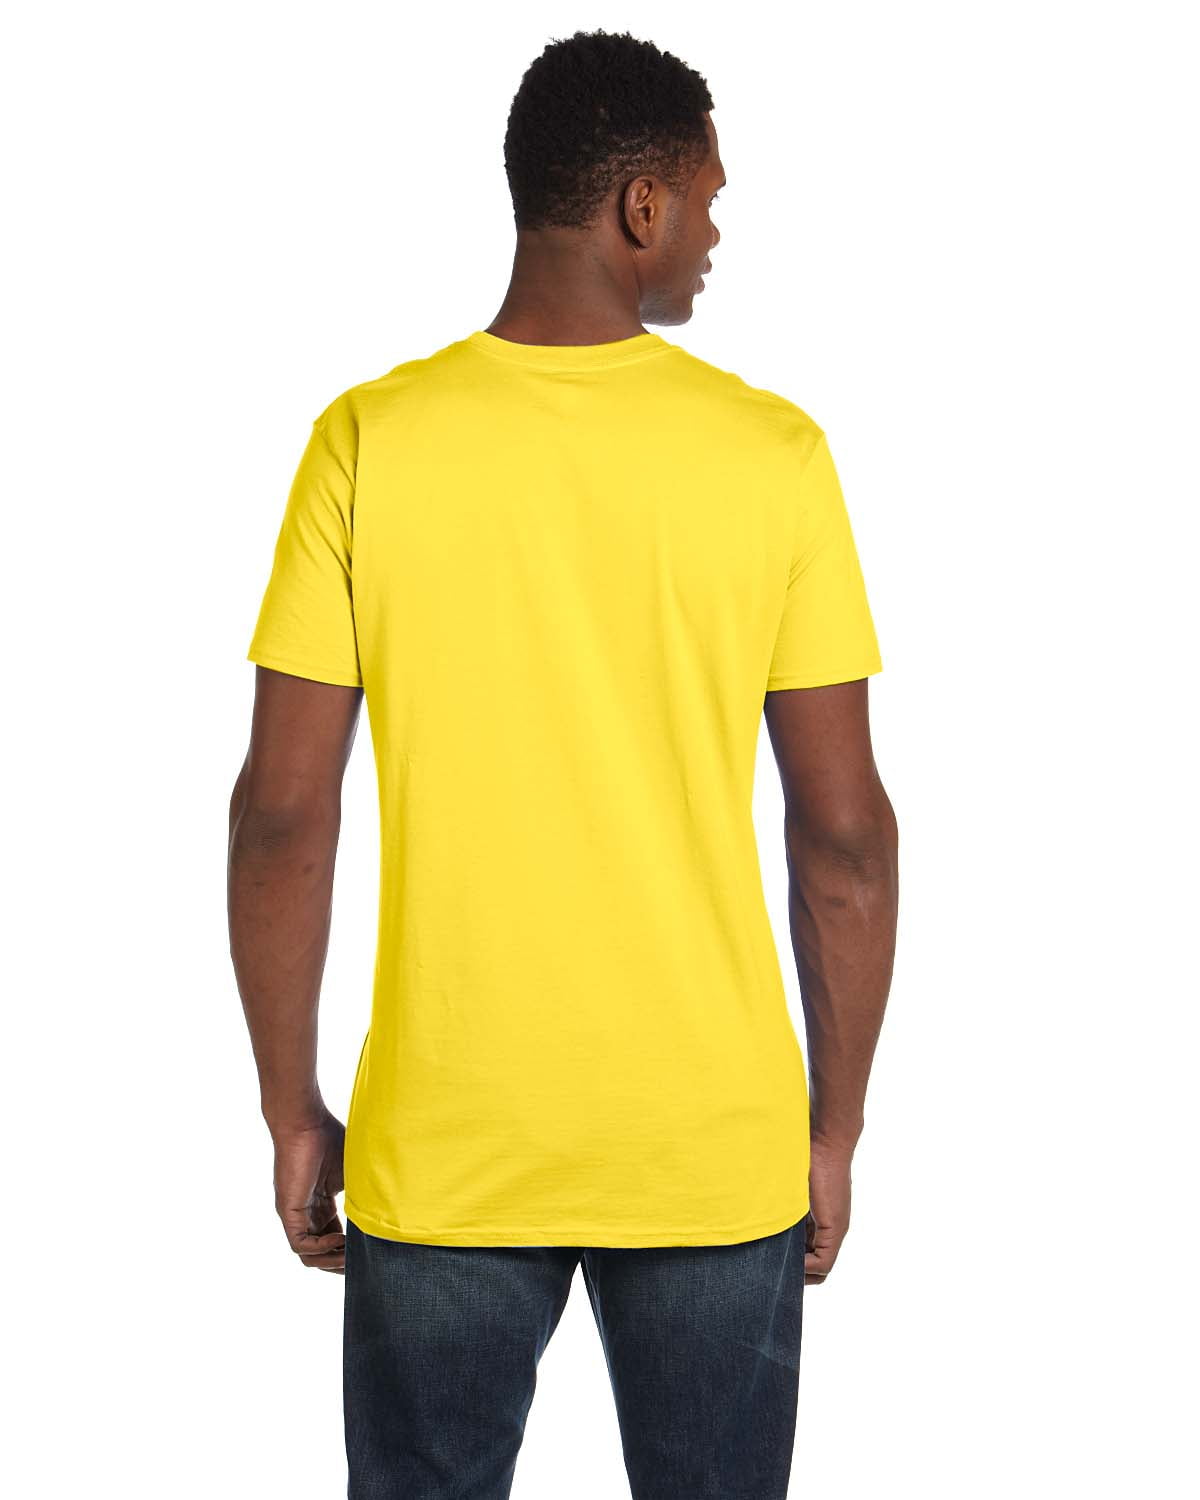 Mens 100% Ringspun Cotton nano-T T-Shirt 4980 (5 PACK) - Walmart.com